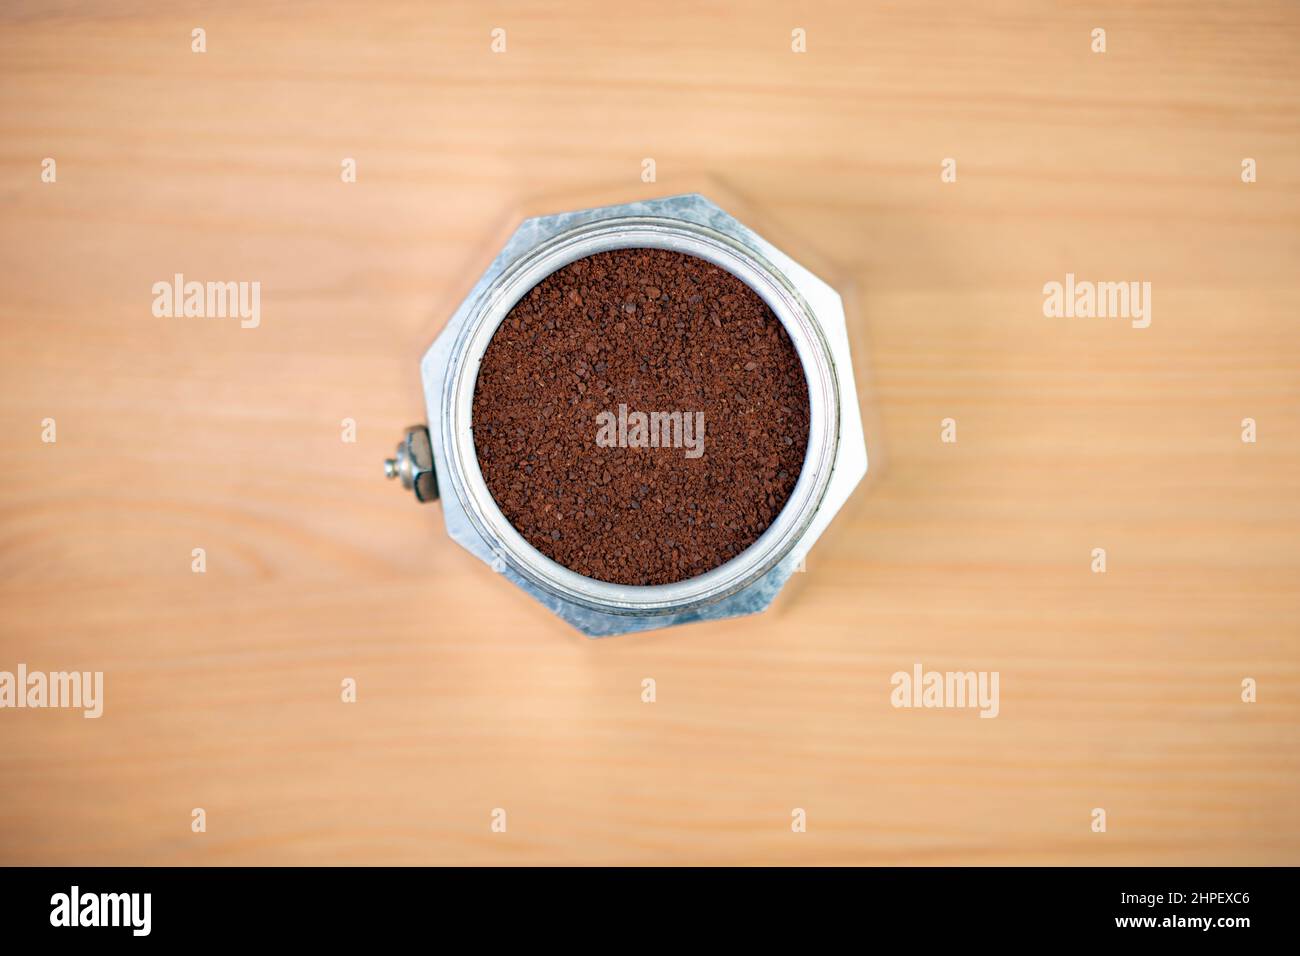 Stove top coffee machine moka percolator filled with ground coffee Stock Photo